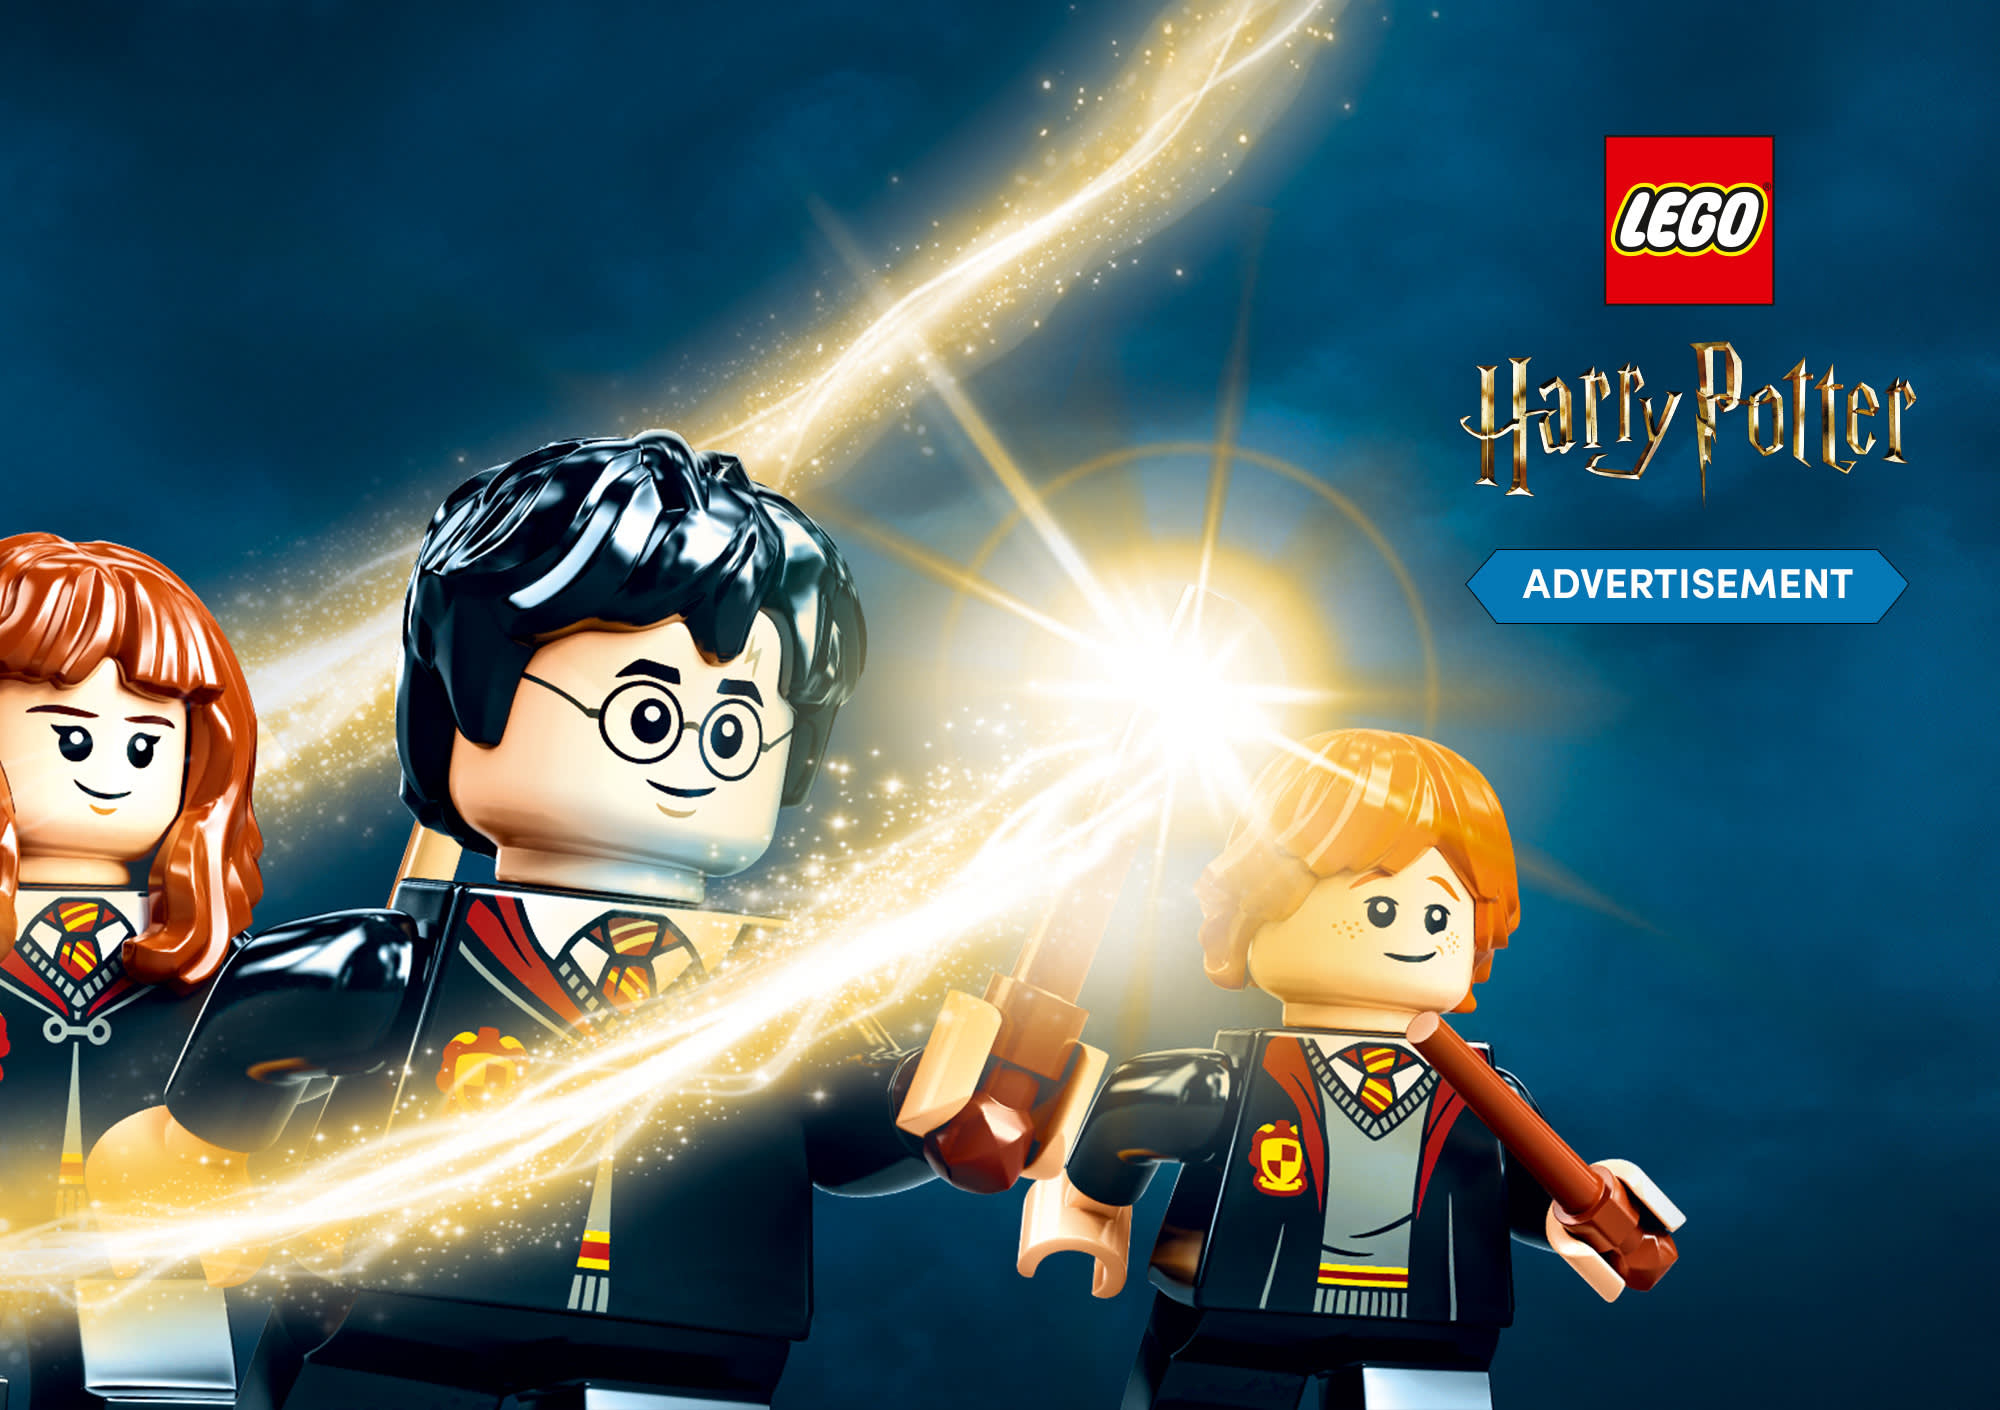 LEGO-header-image-clearer-advertisement